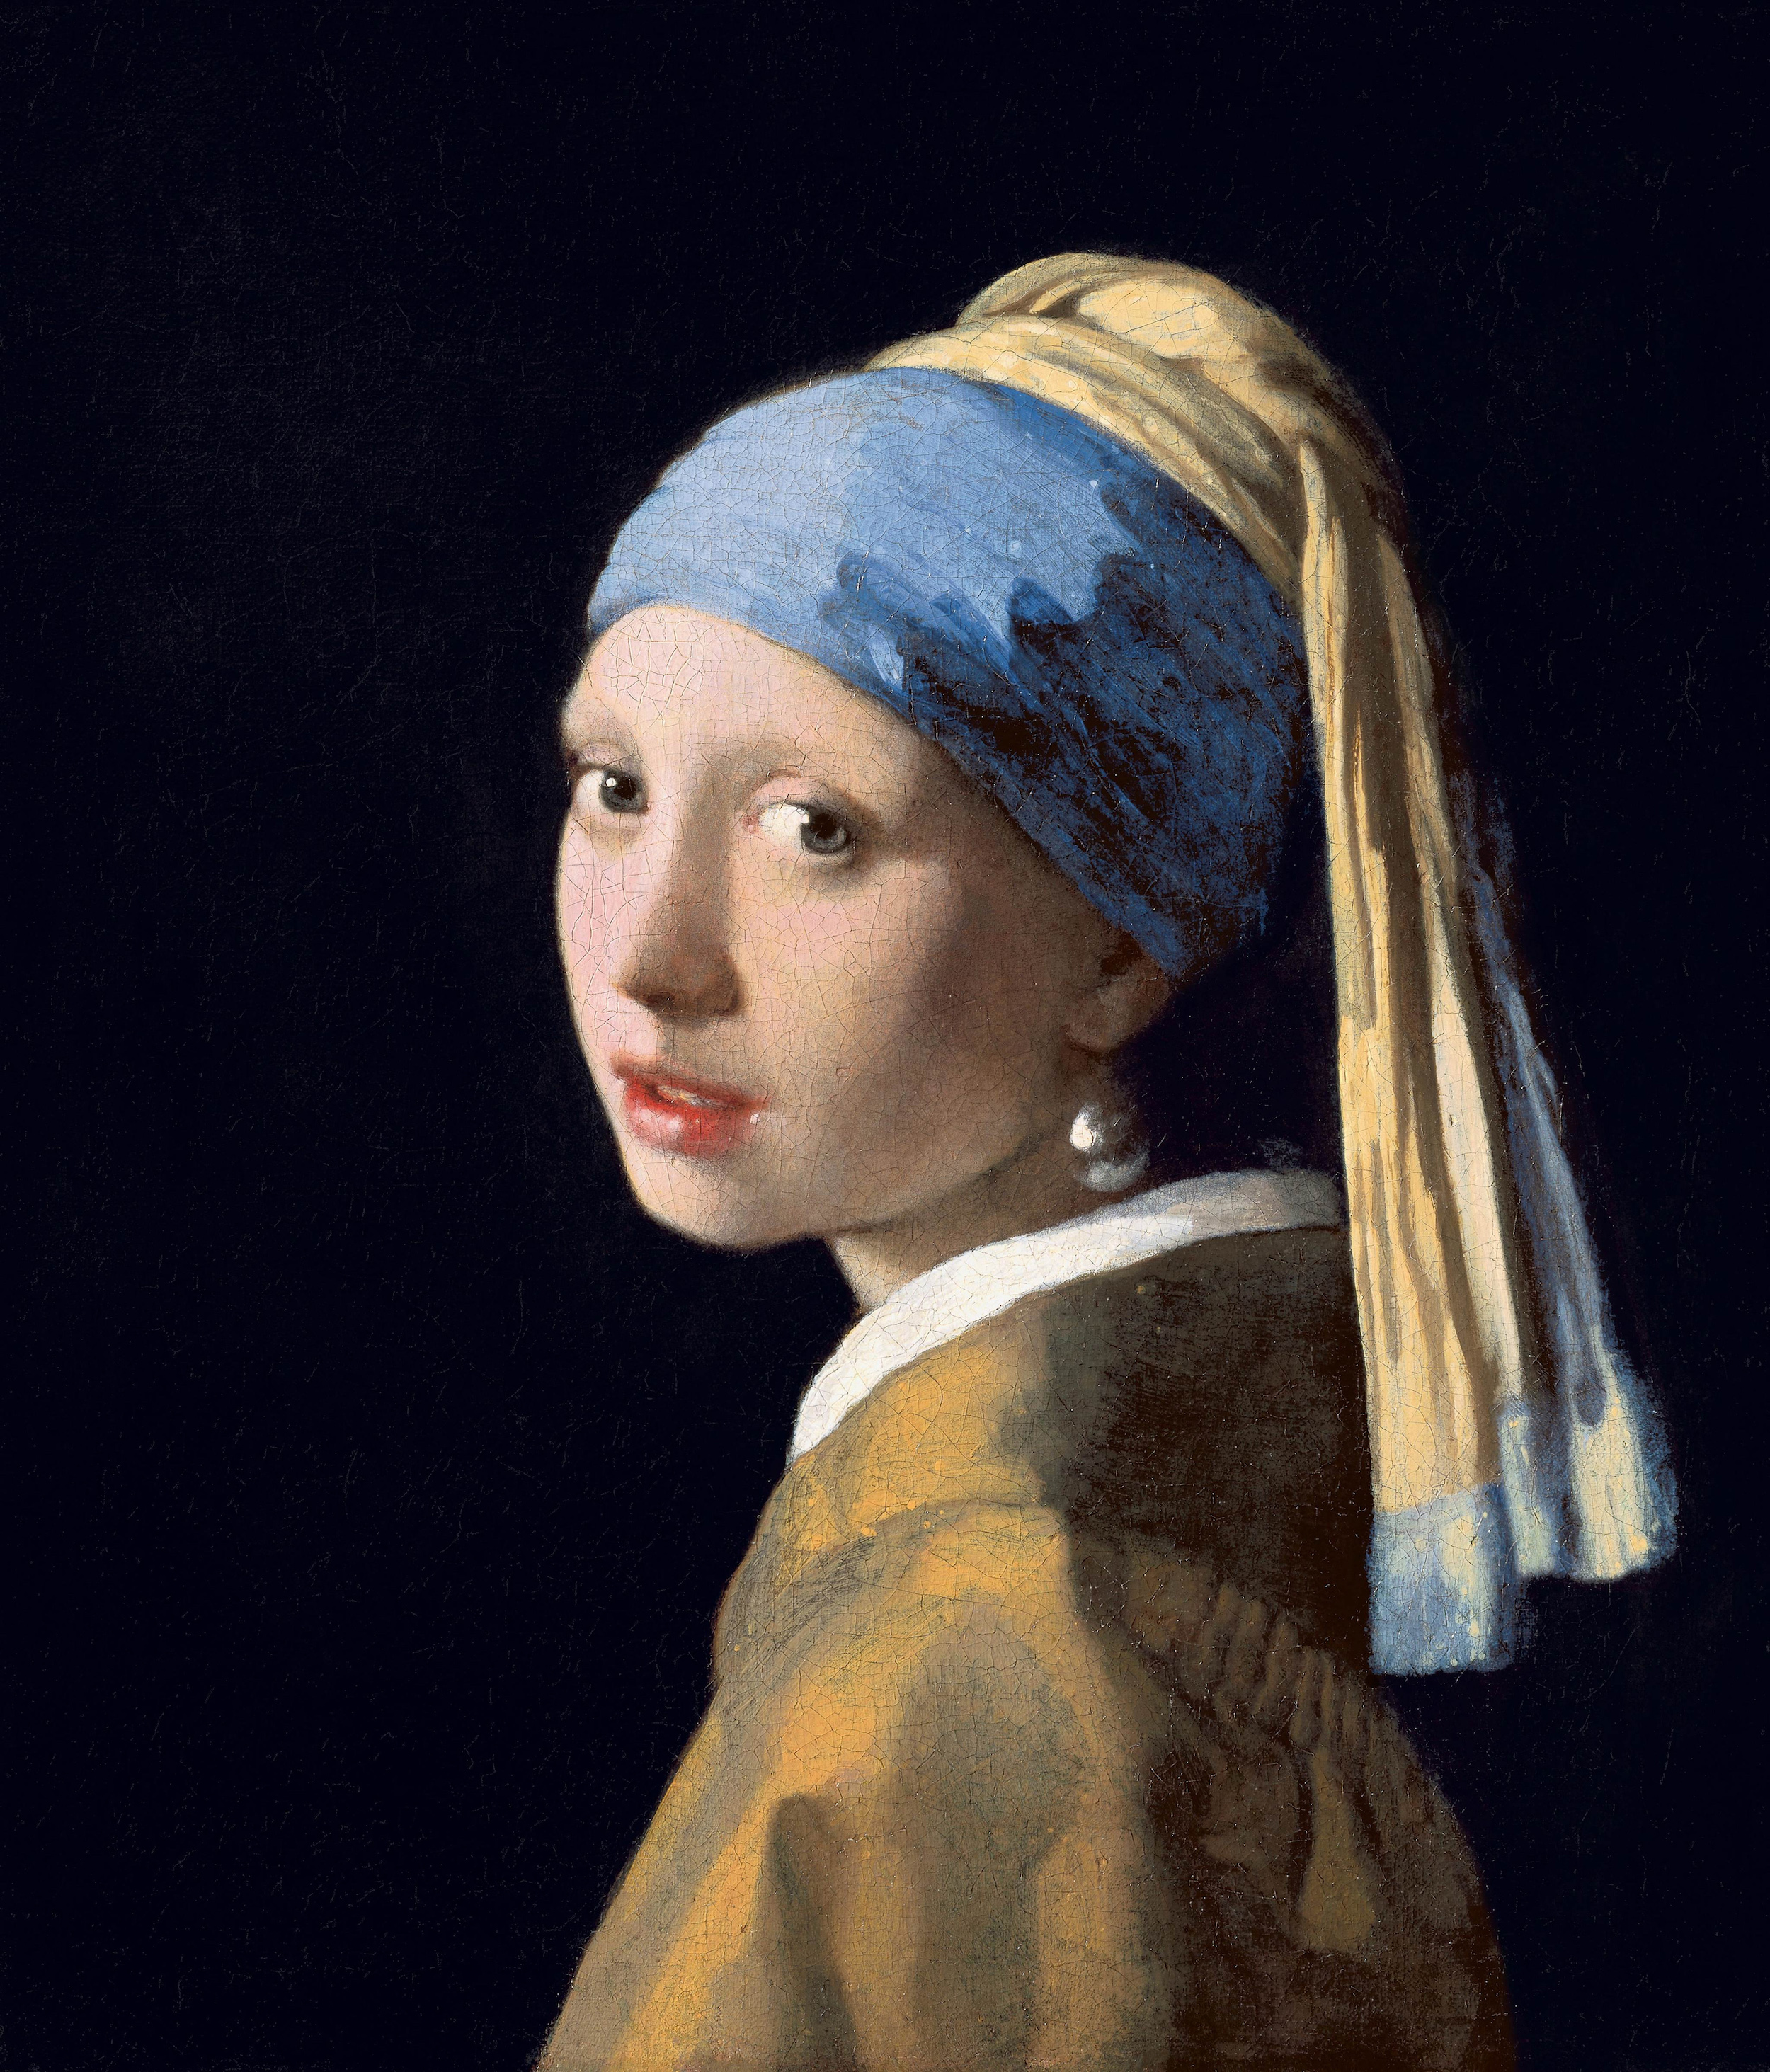 İnci Küpeli Kız by Johannes Vermeer - 1665 